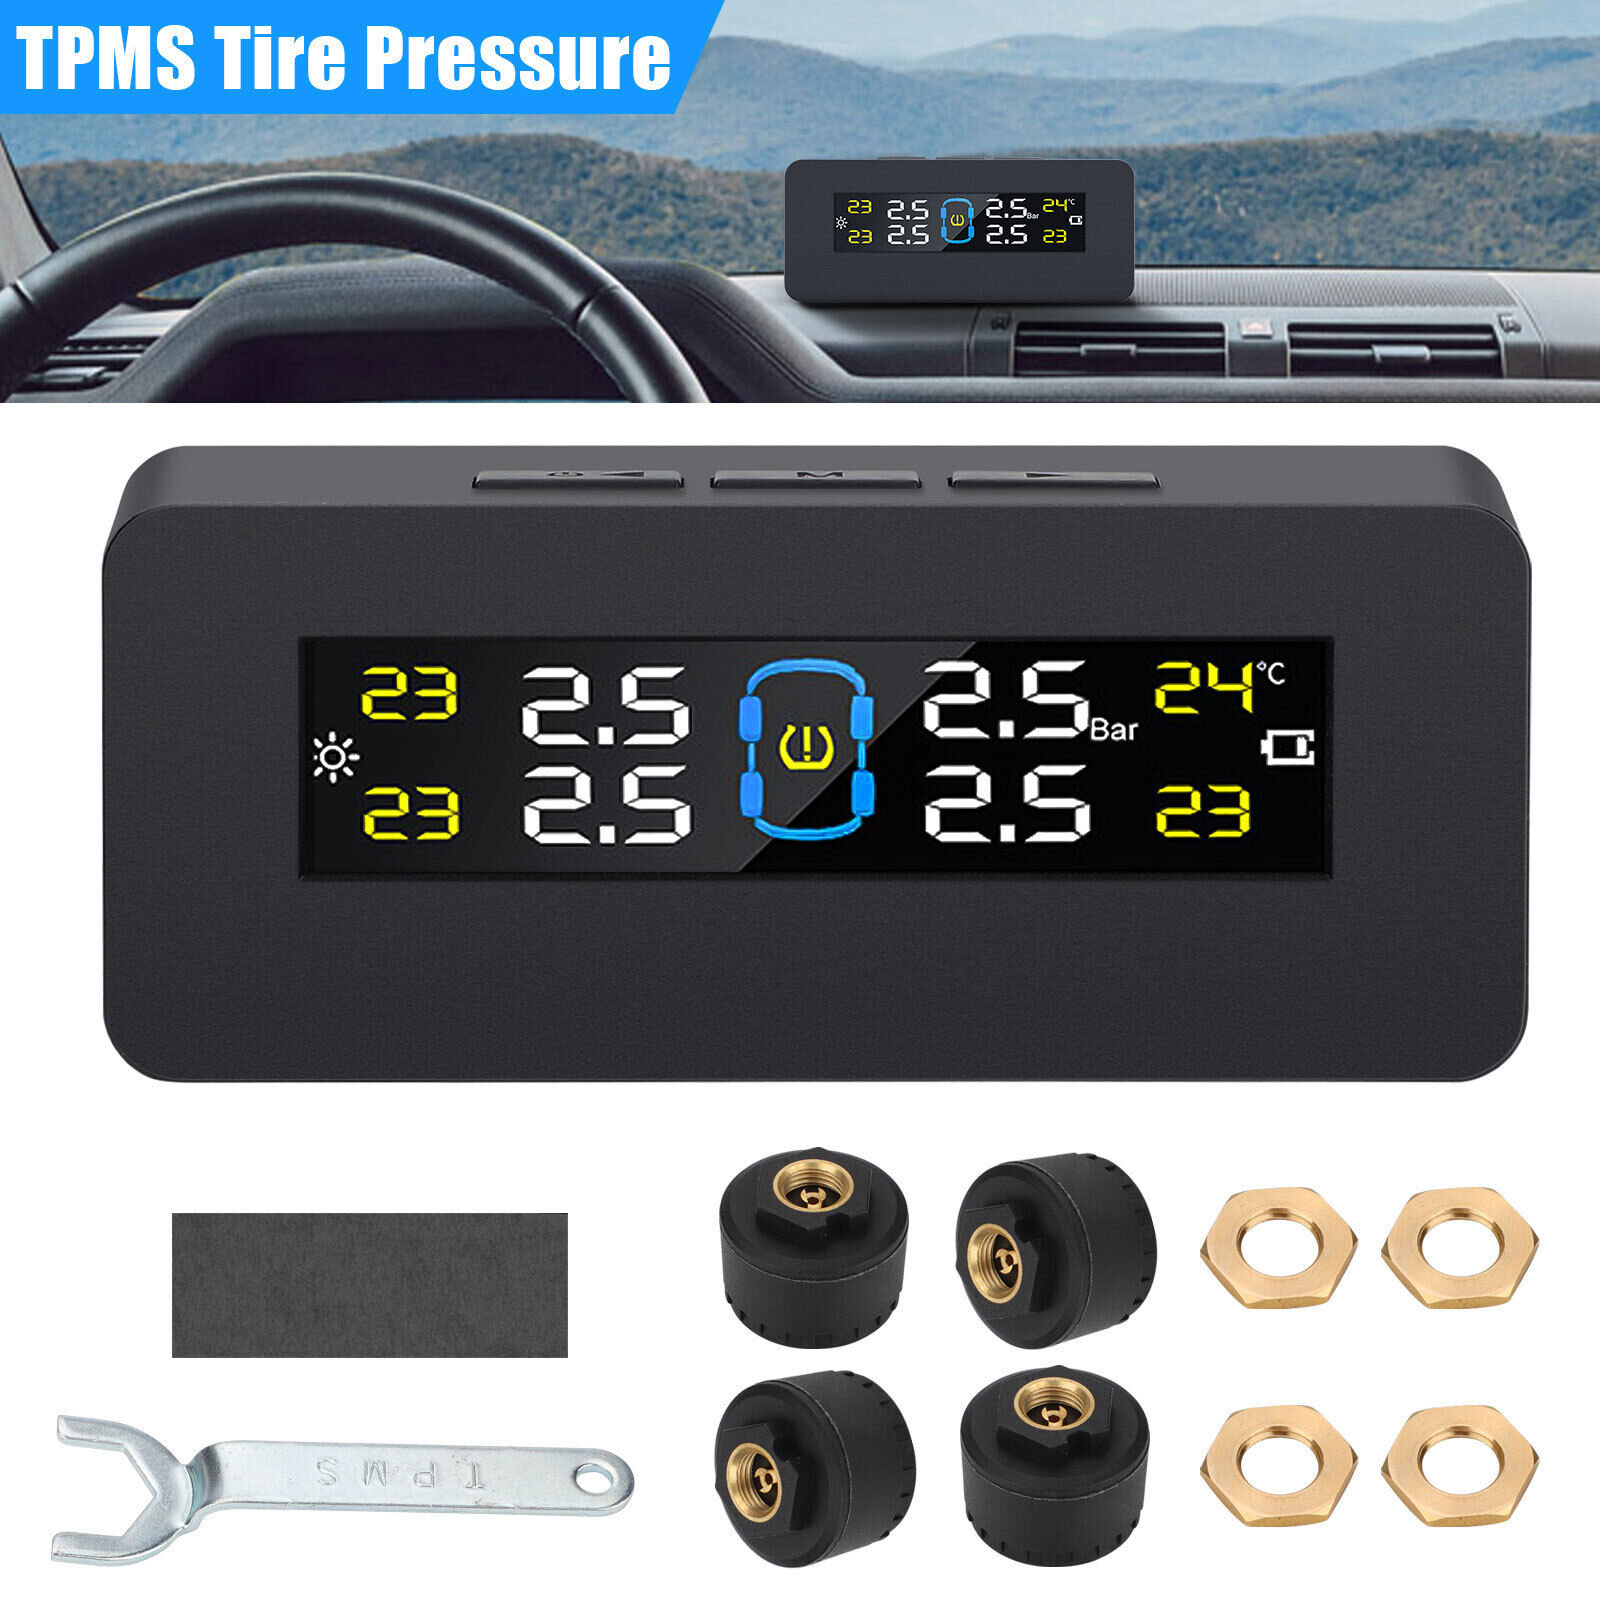 Wireless Car RV Truck TPMS Tire Pressure Monitoring System +4 External Sensors